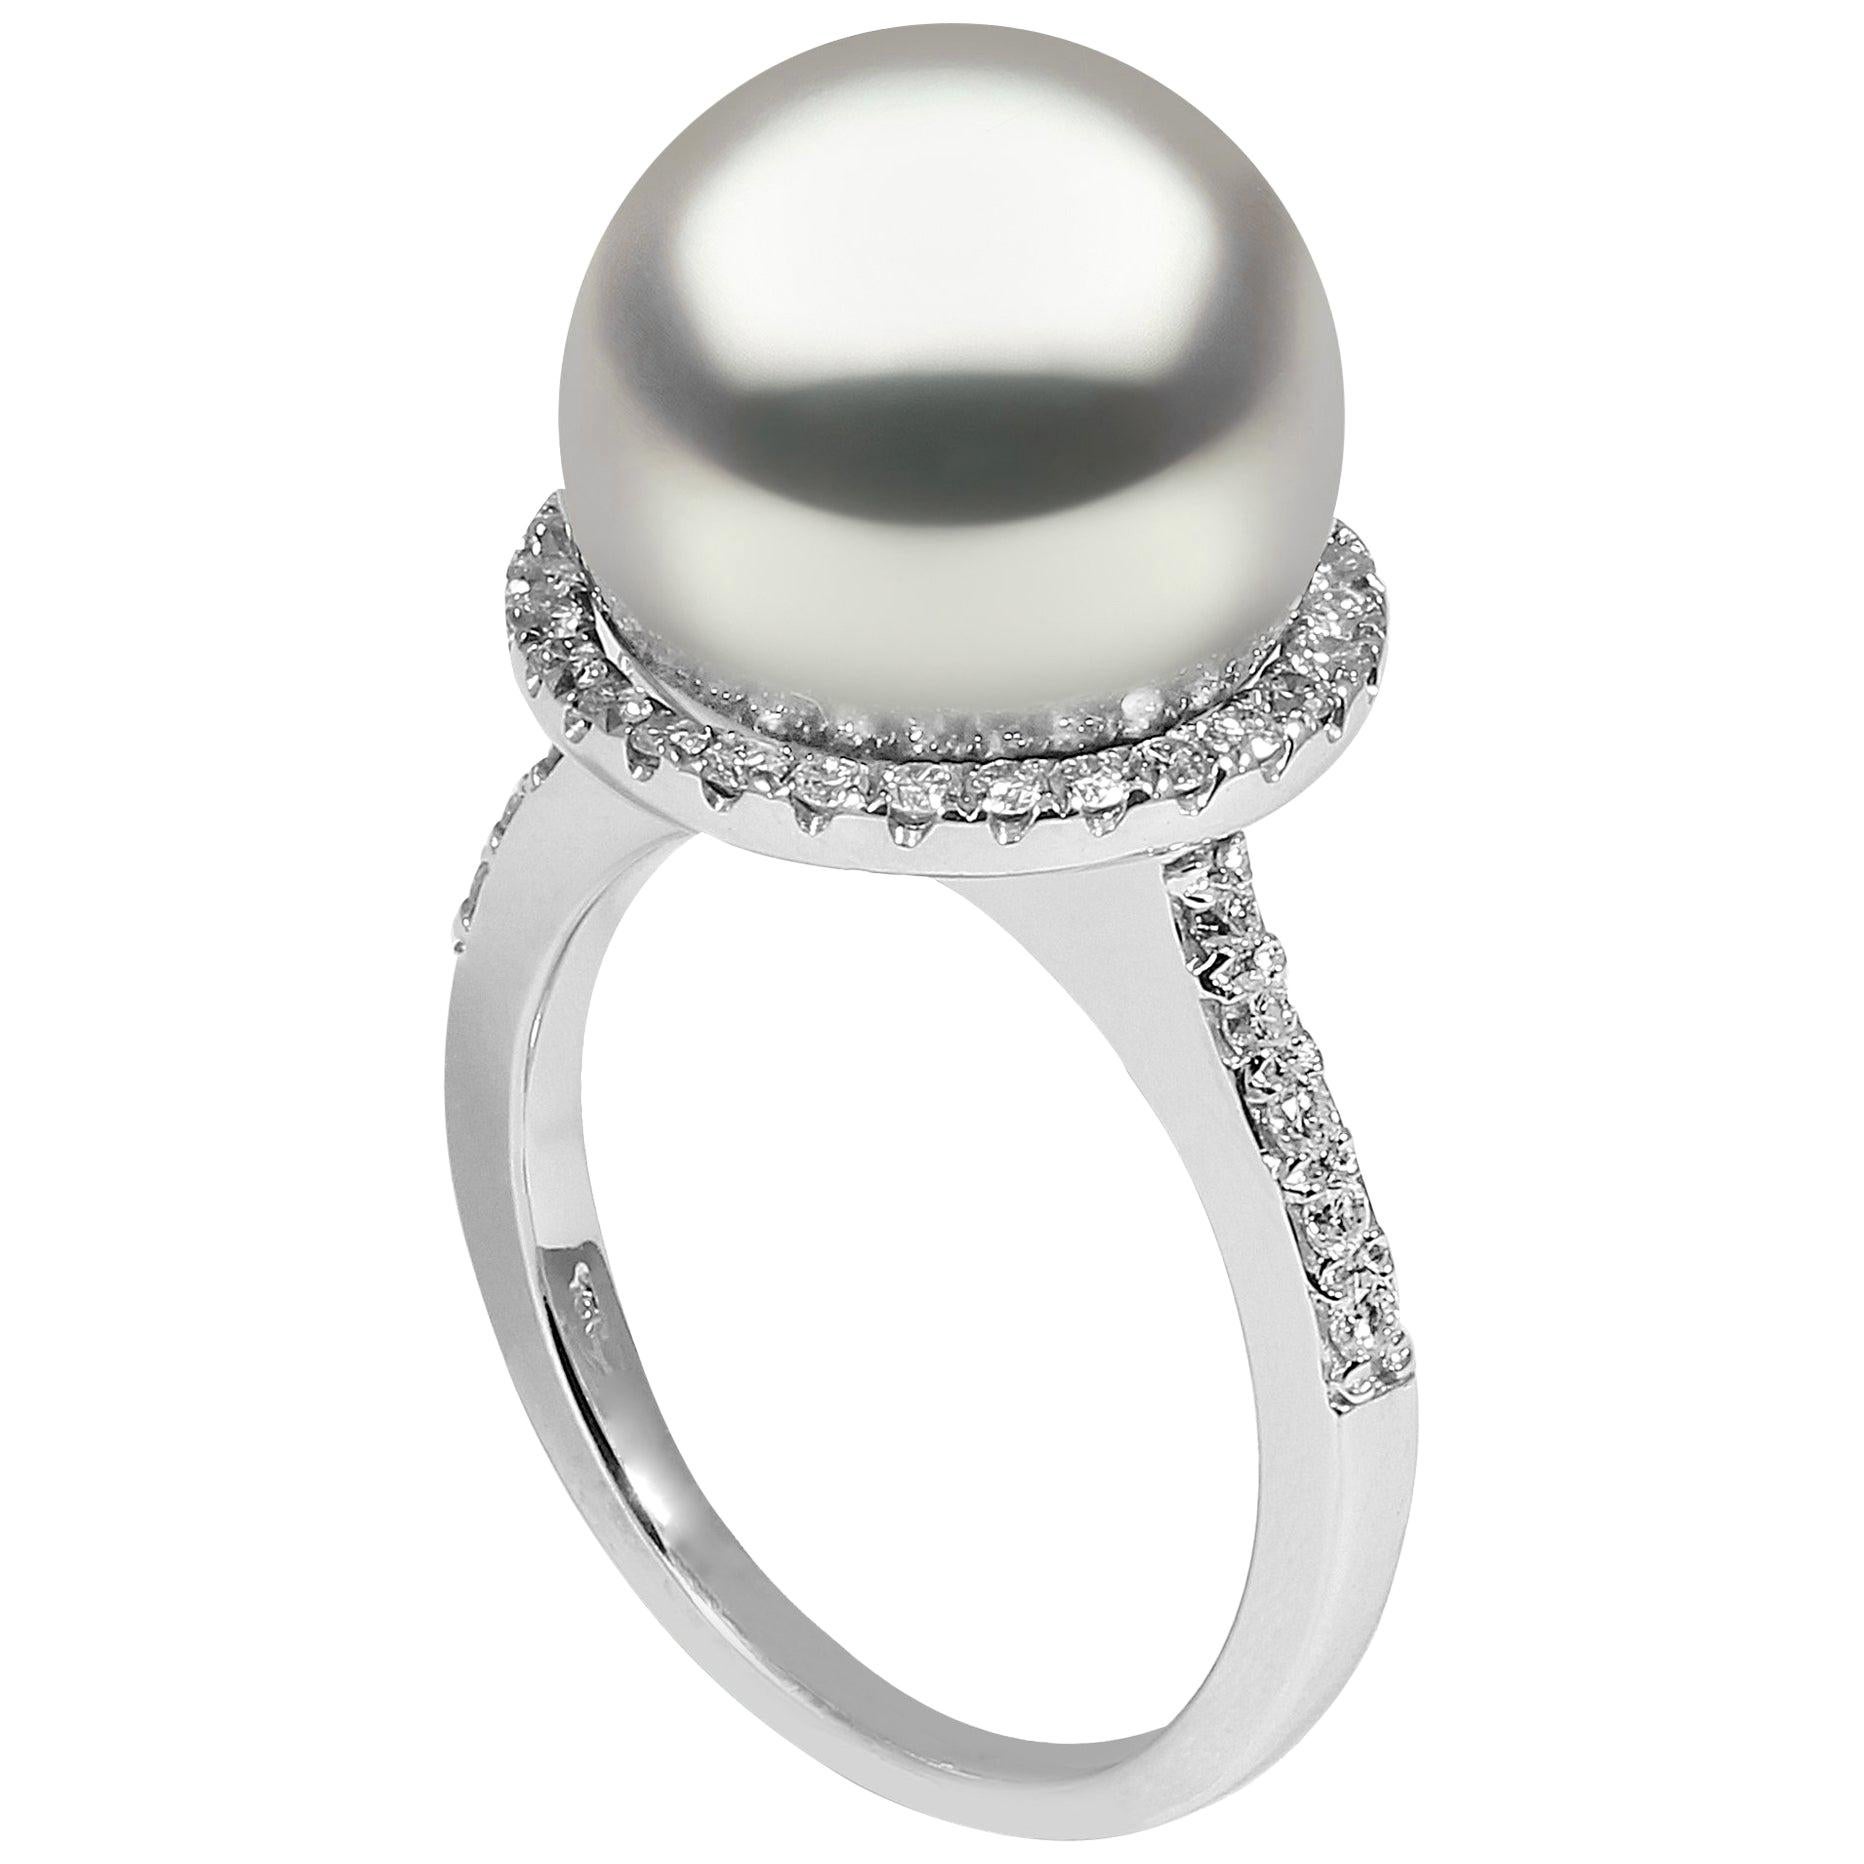 Yoko London South Sea Pearl and Diamond Halo Ring in 18 Karat White Gold